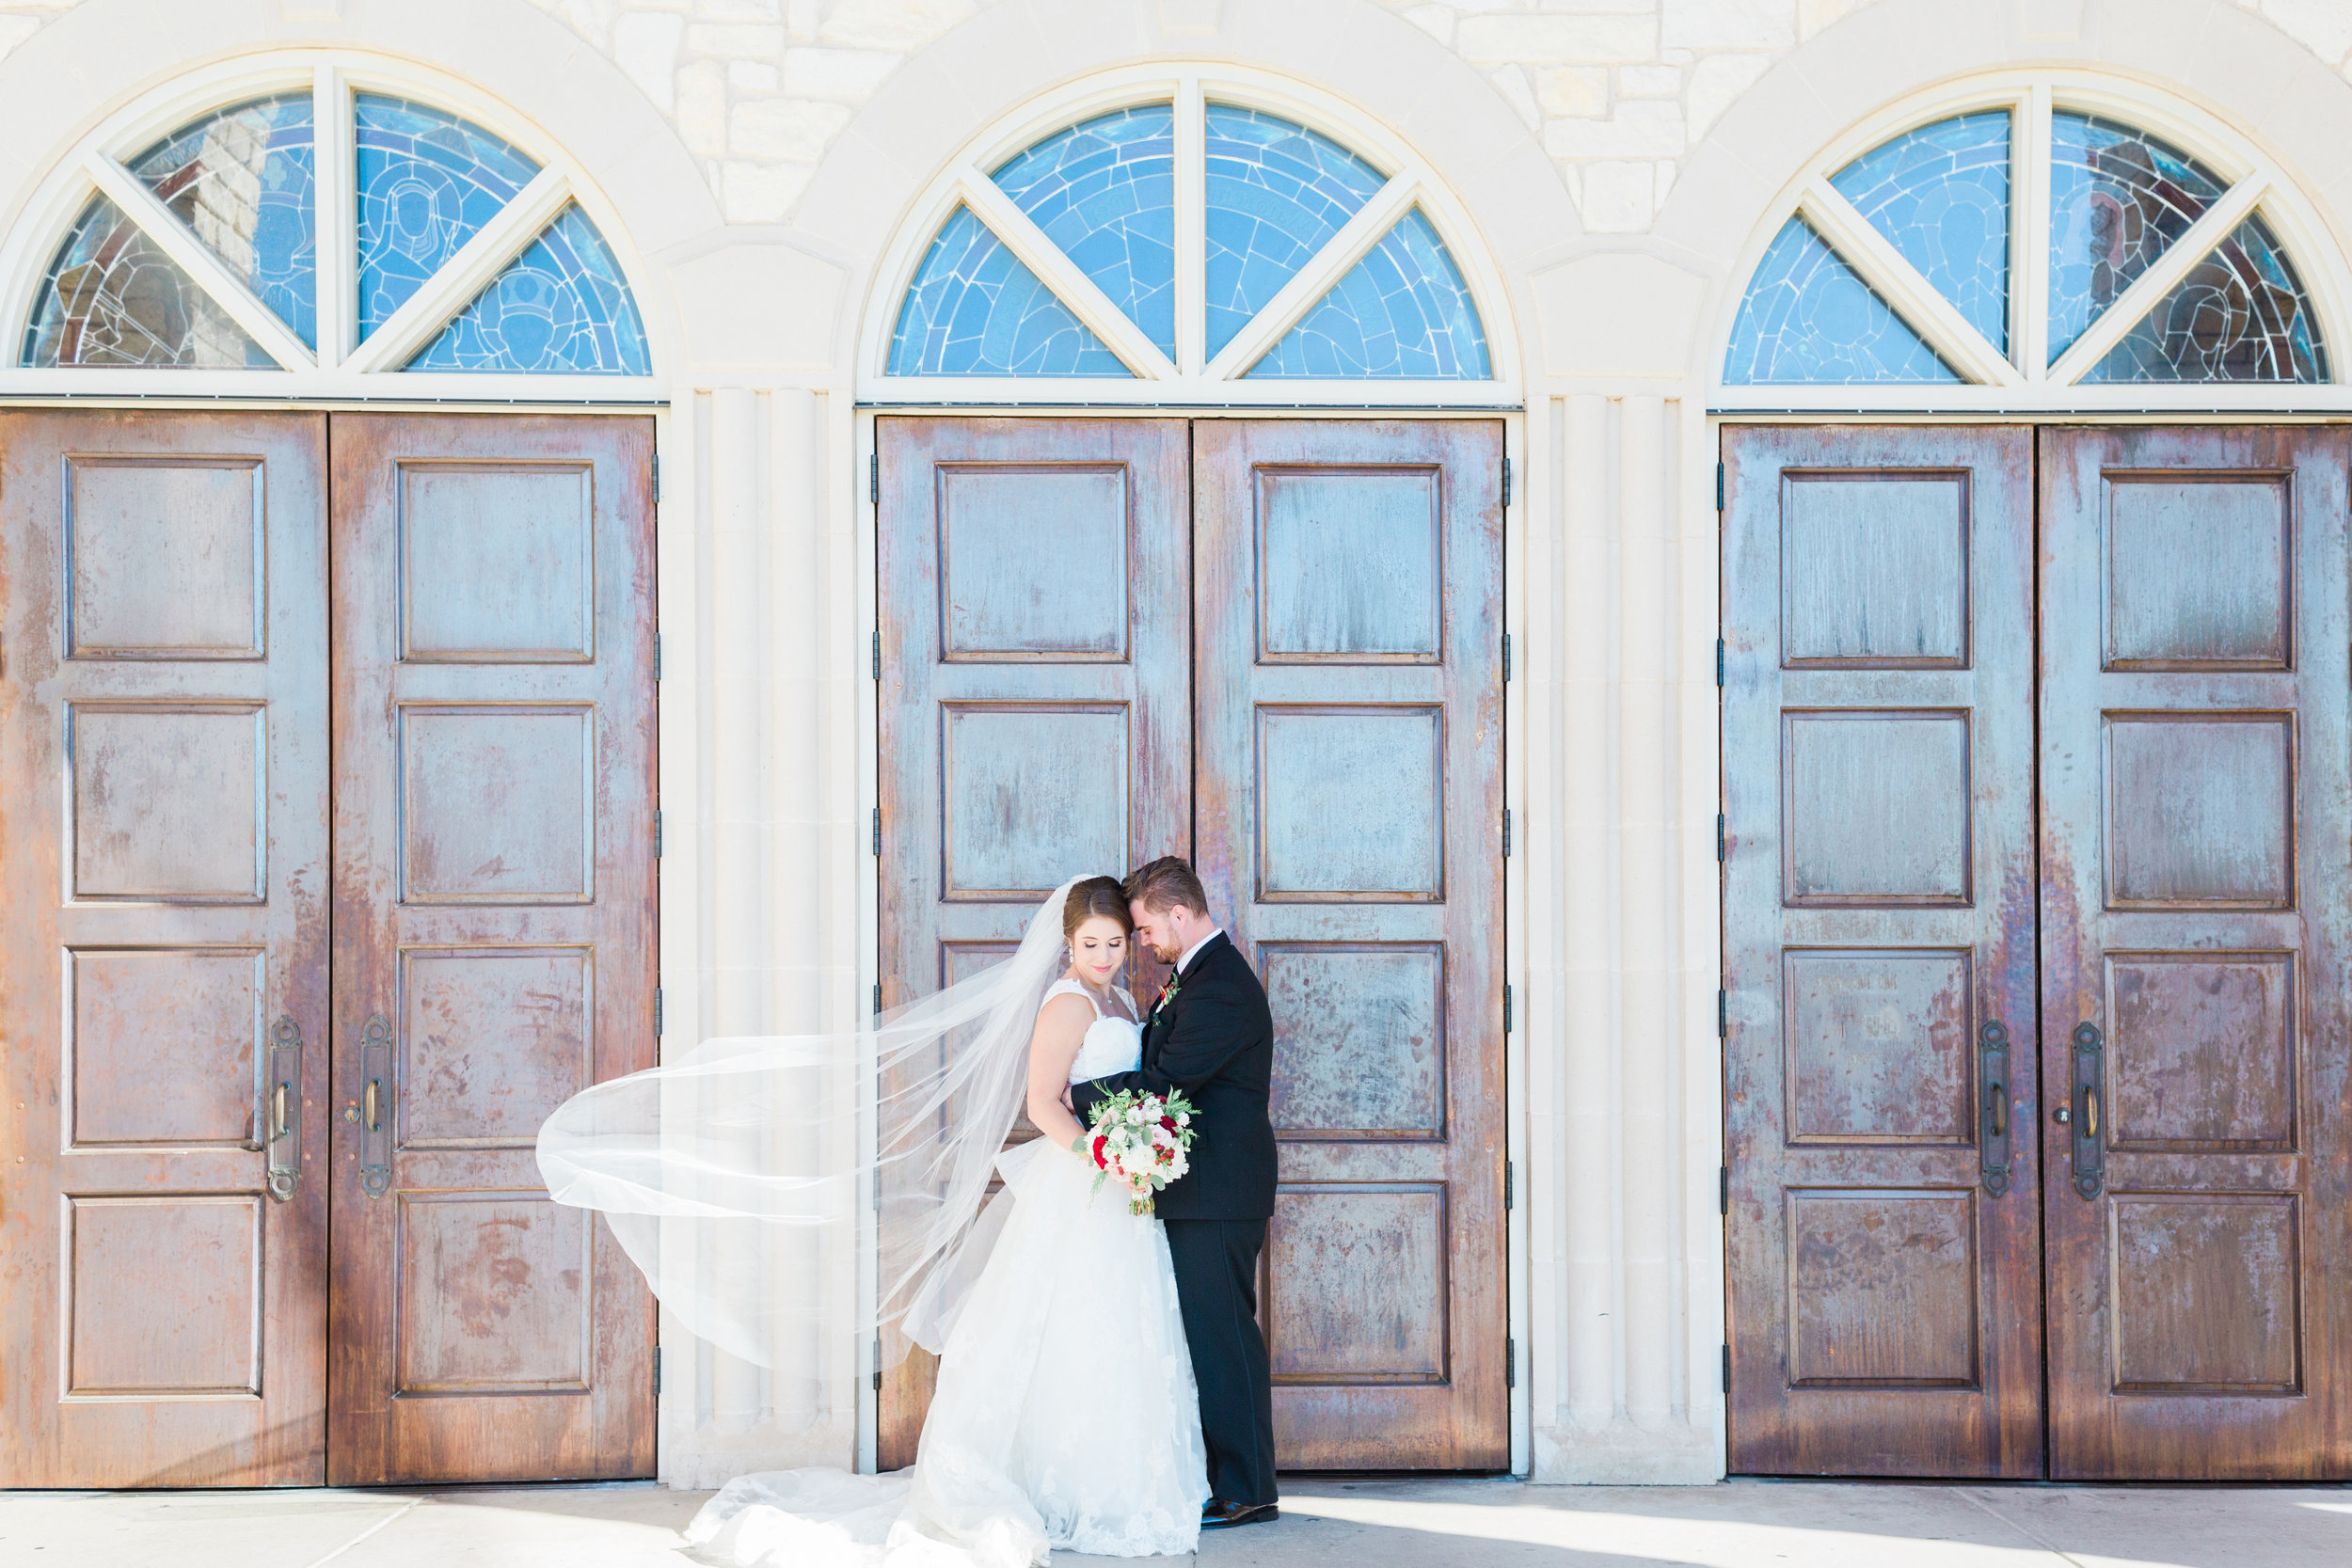 A Prelude to Winter Wedding | Duncan & Rachel